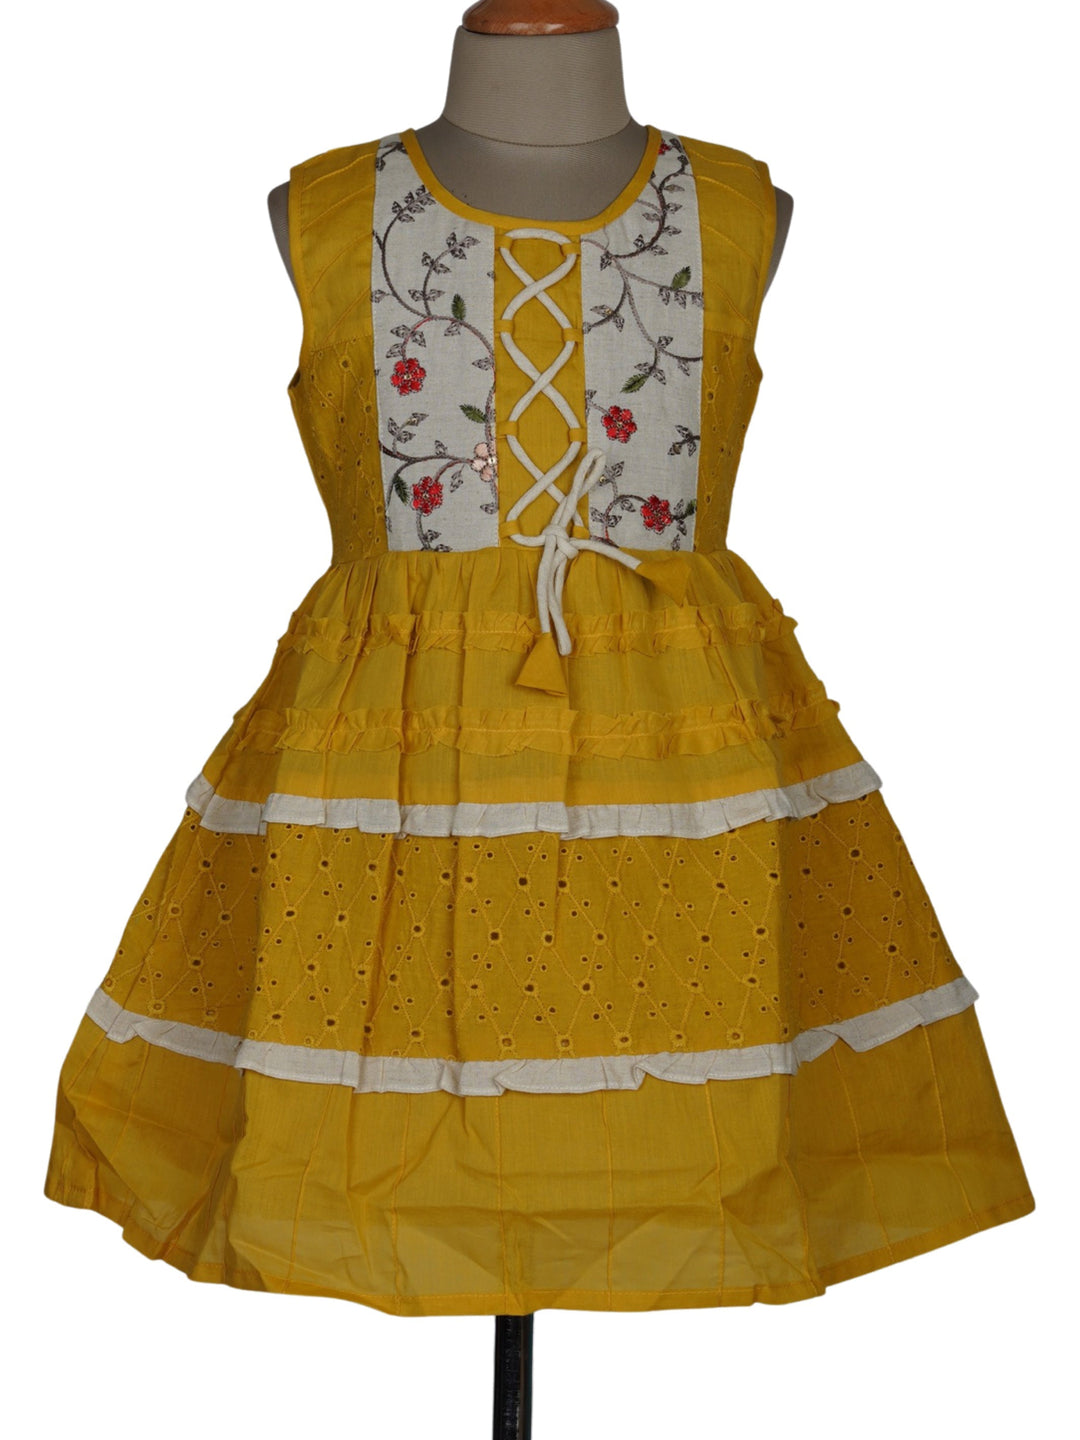 The Nesavu Frocks & Dresses Kids Soft Cotton Frock For Daily Wear psr silks Nesavu 16 (1Y-2Y) / yellow GFC645